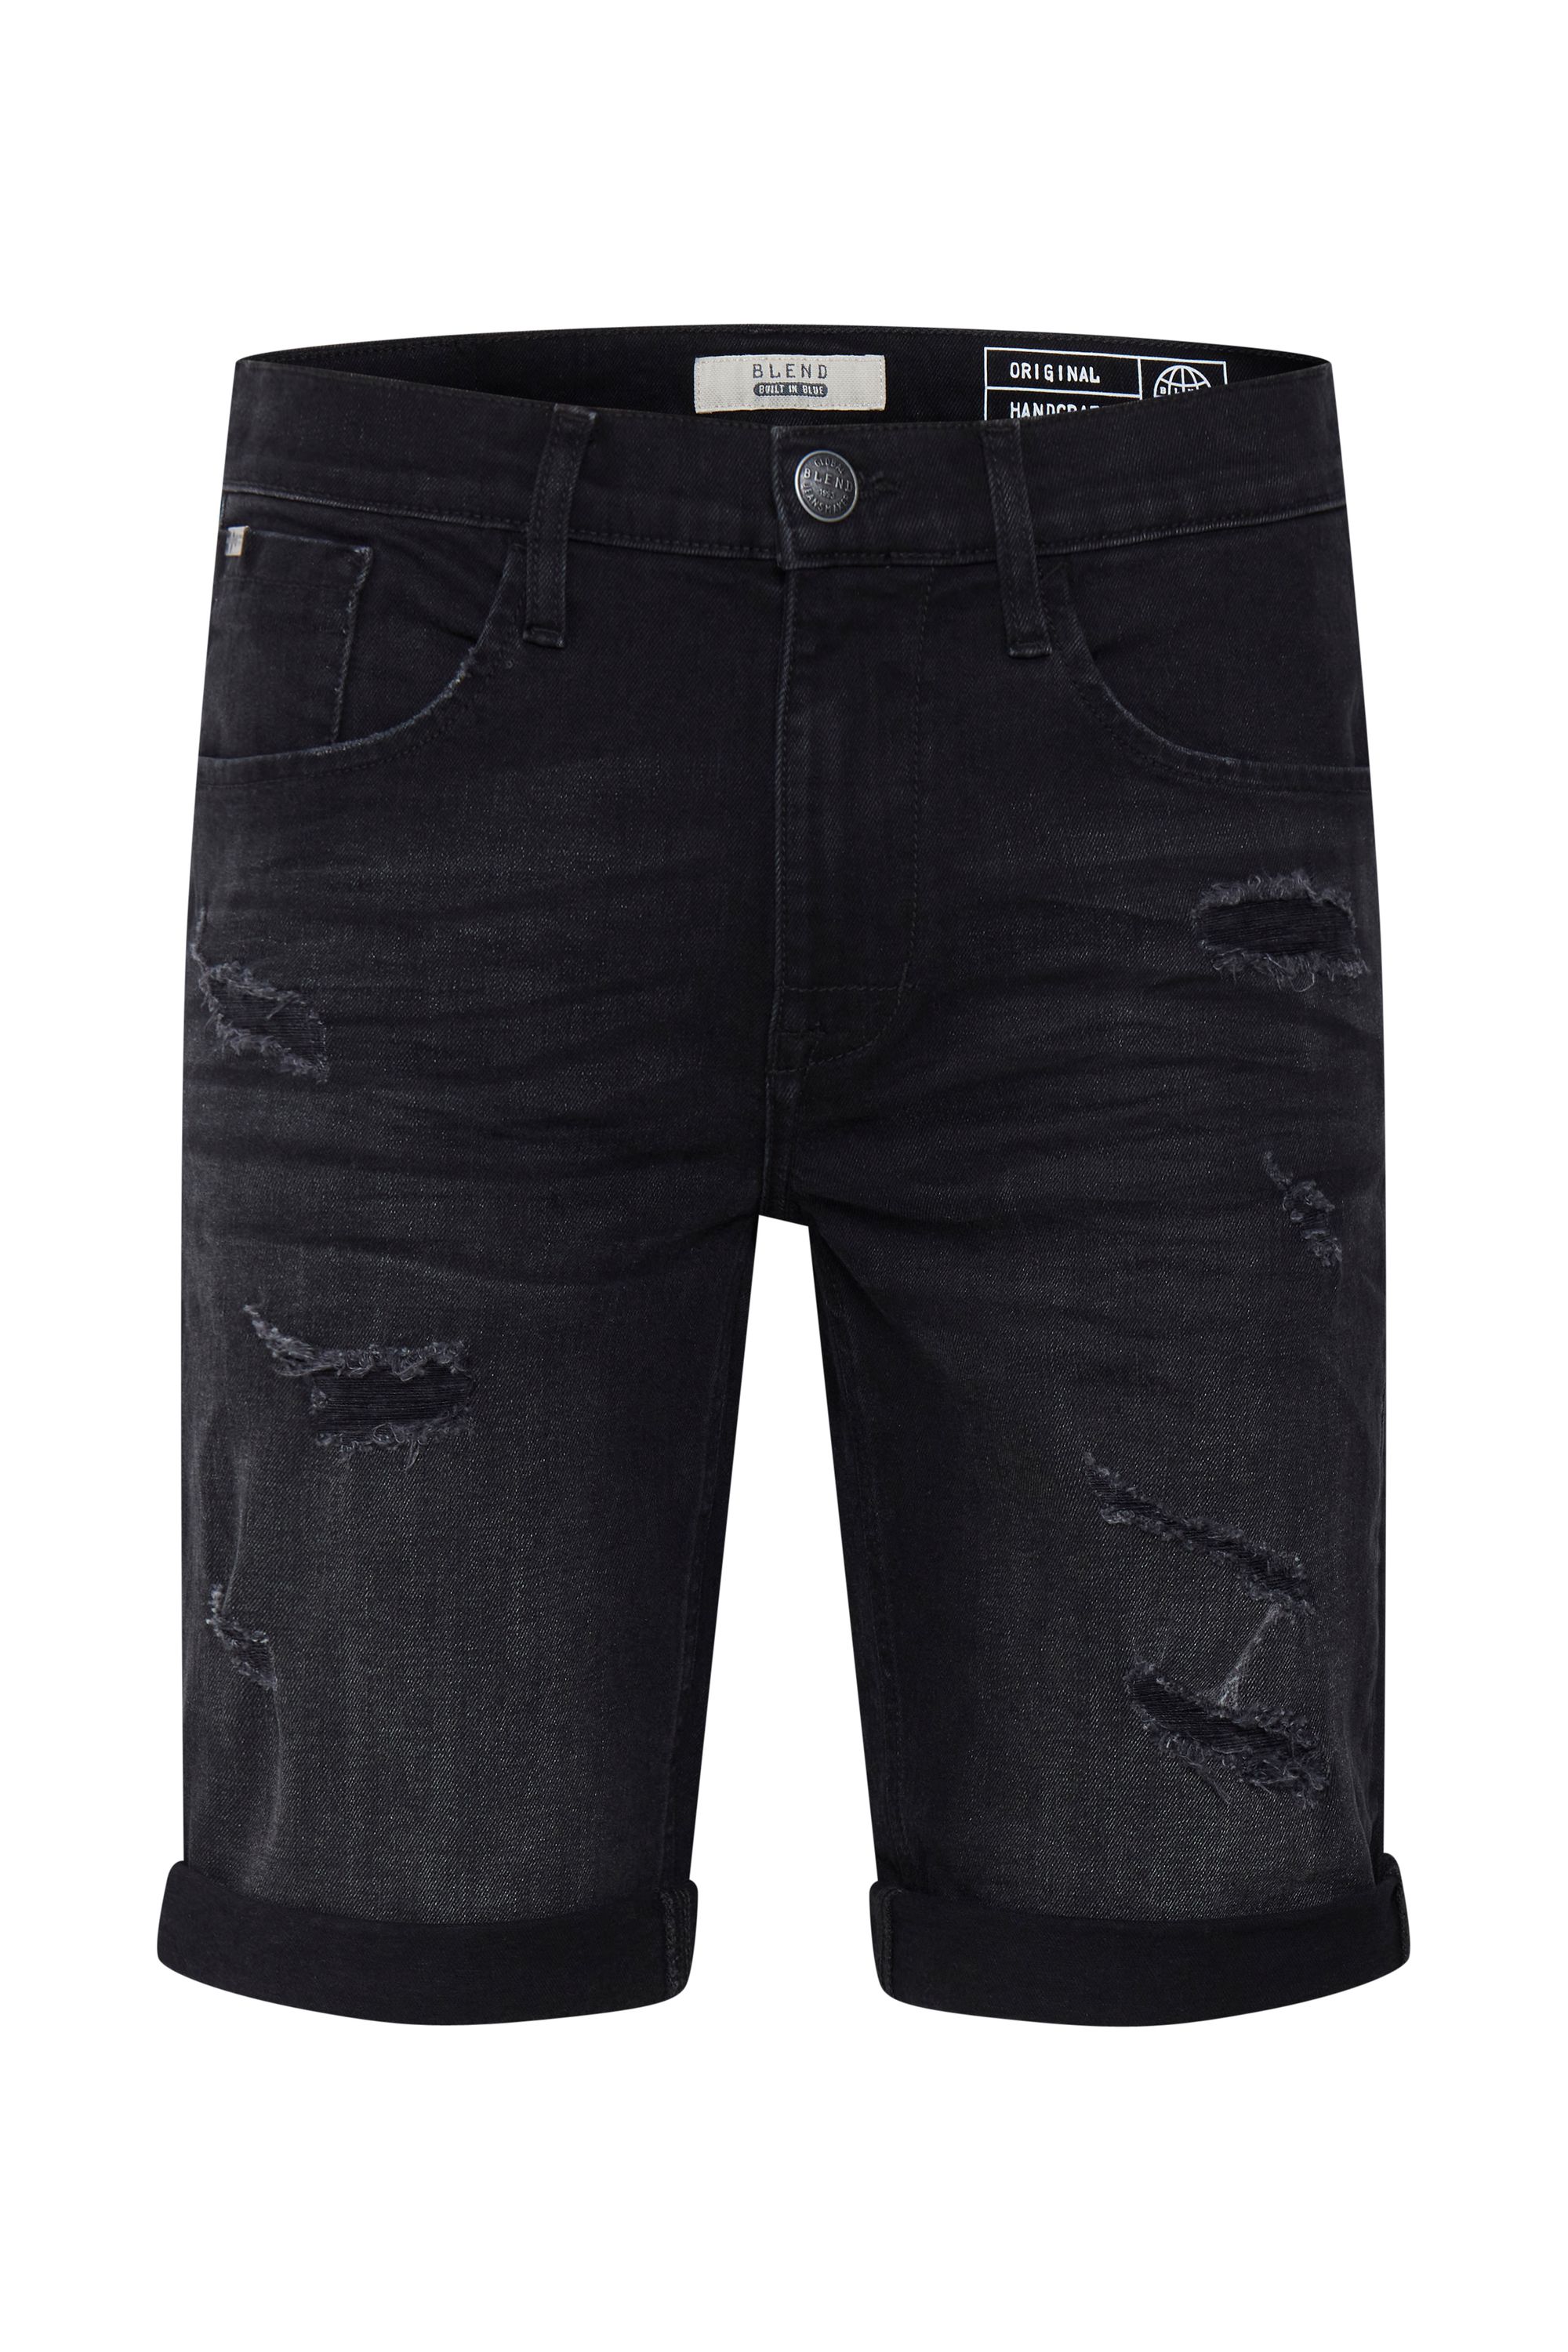 Тканевые шорты BLEND Jeans BHDeniz, черный